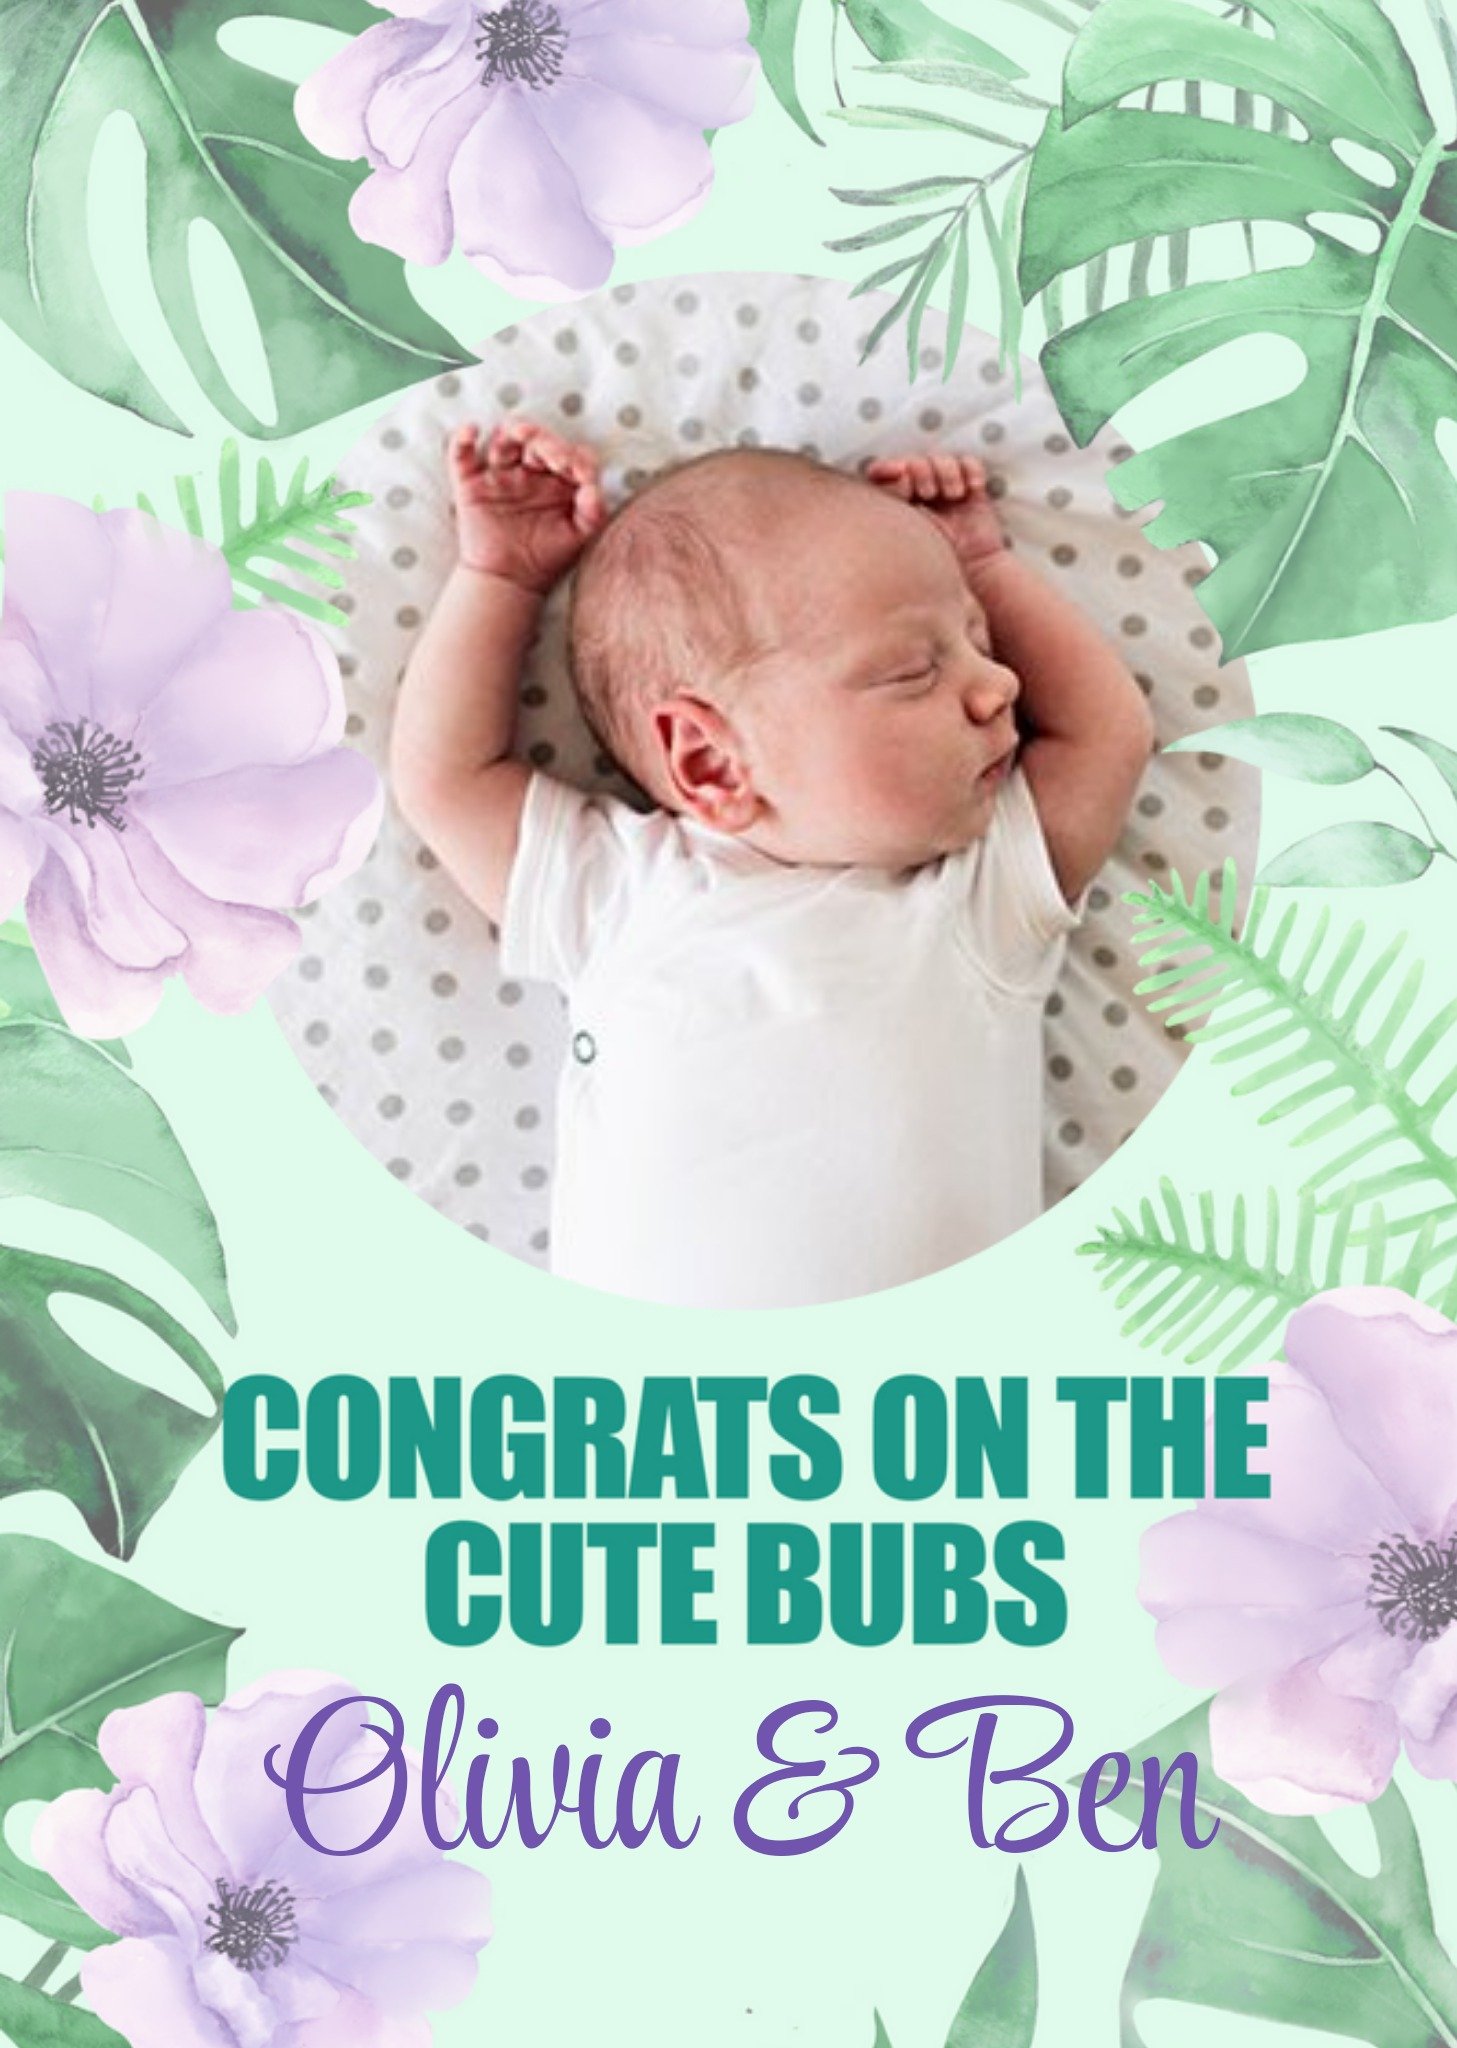 Friends Citrus Bunn Illustration Congratulations Cute New Baby Australia Card, Large